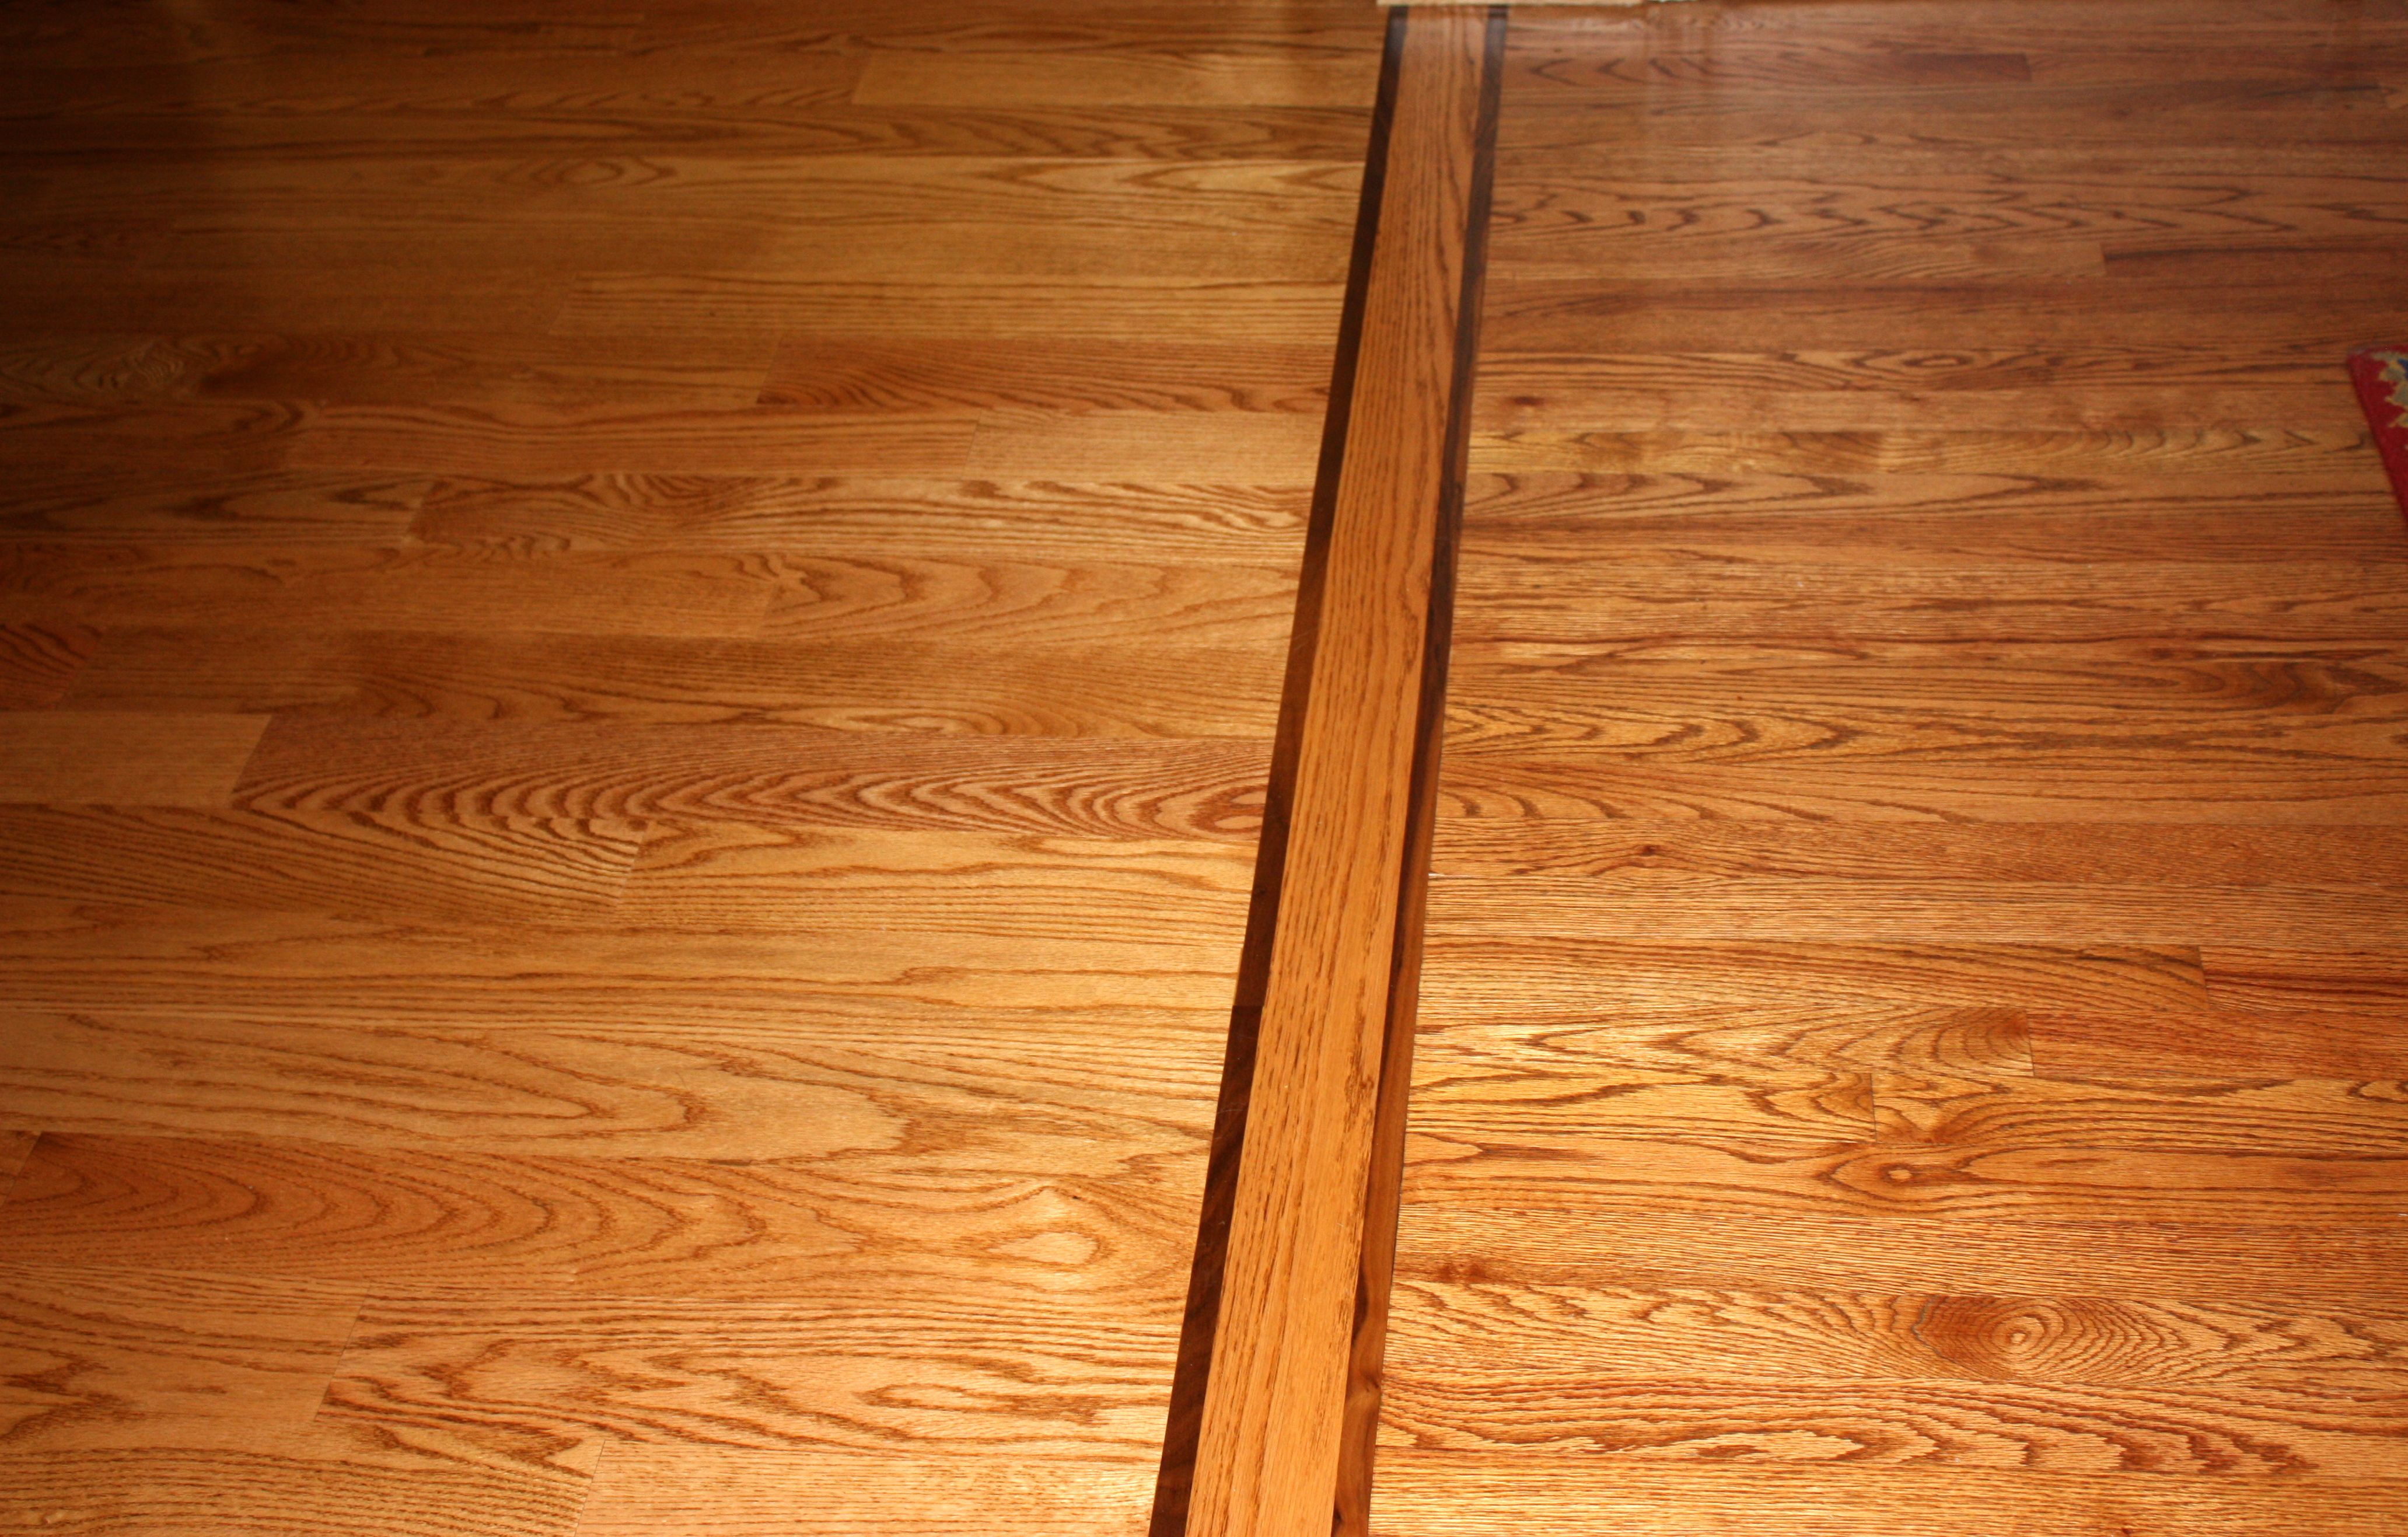 Matching An Existing Hardwood Floor, Can You Match Laminate Flooring